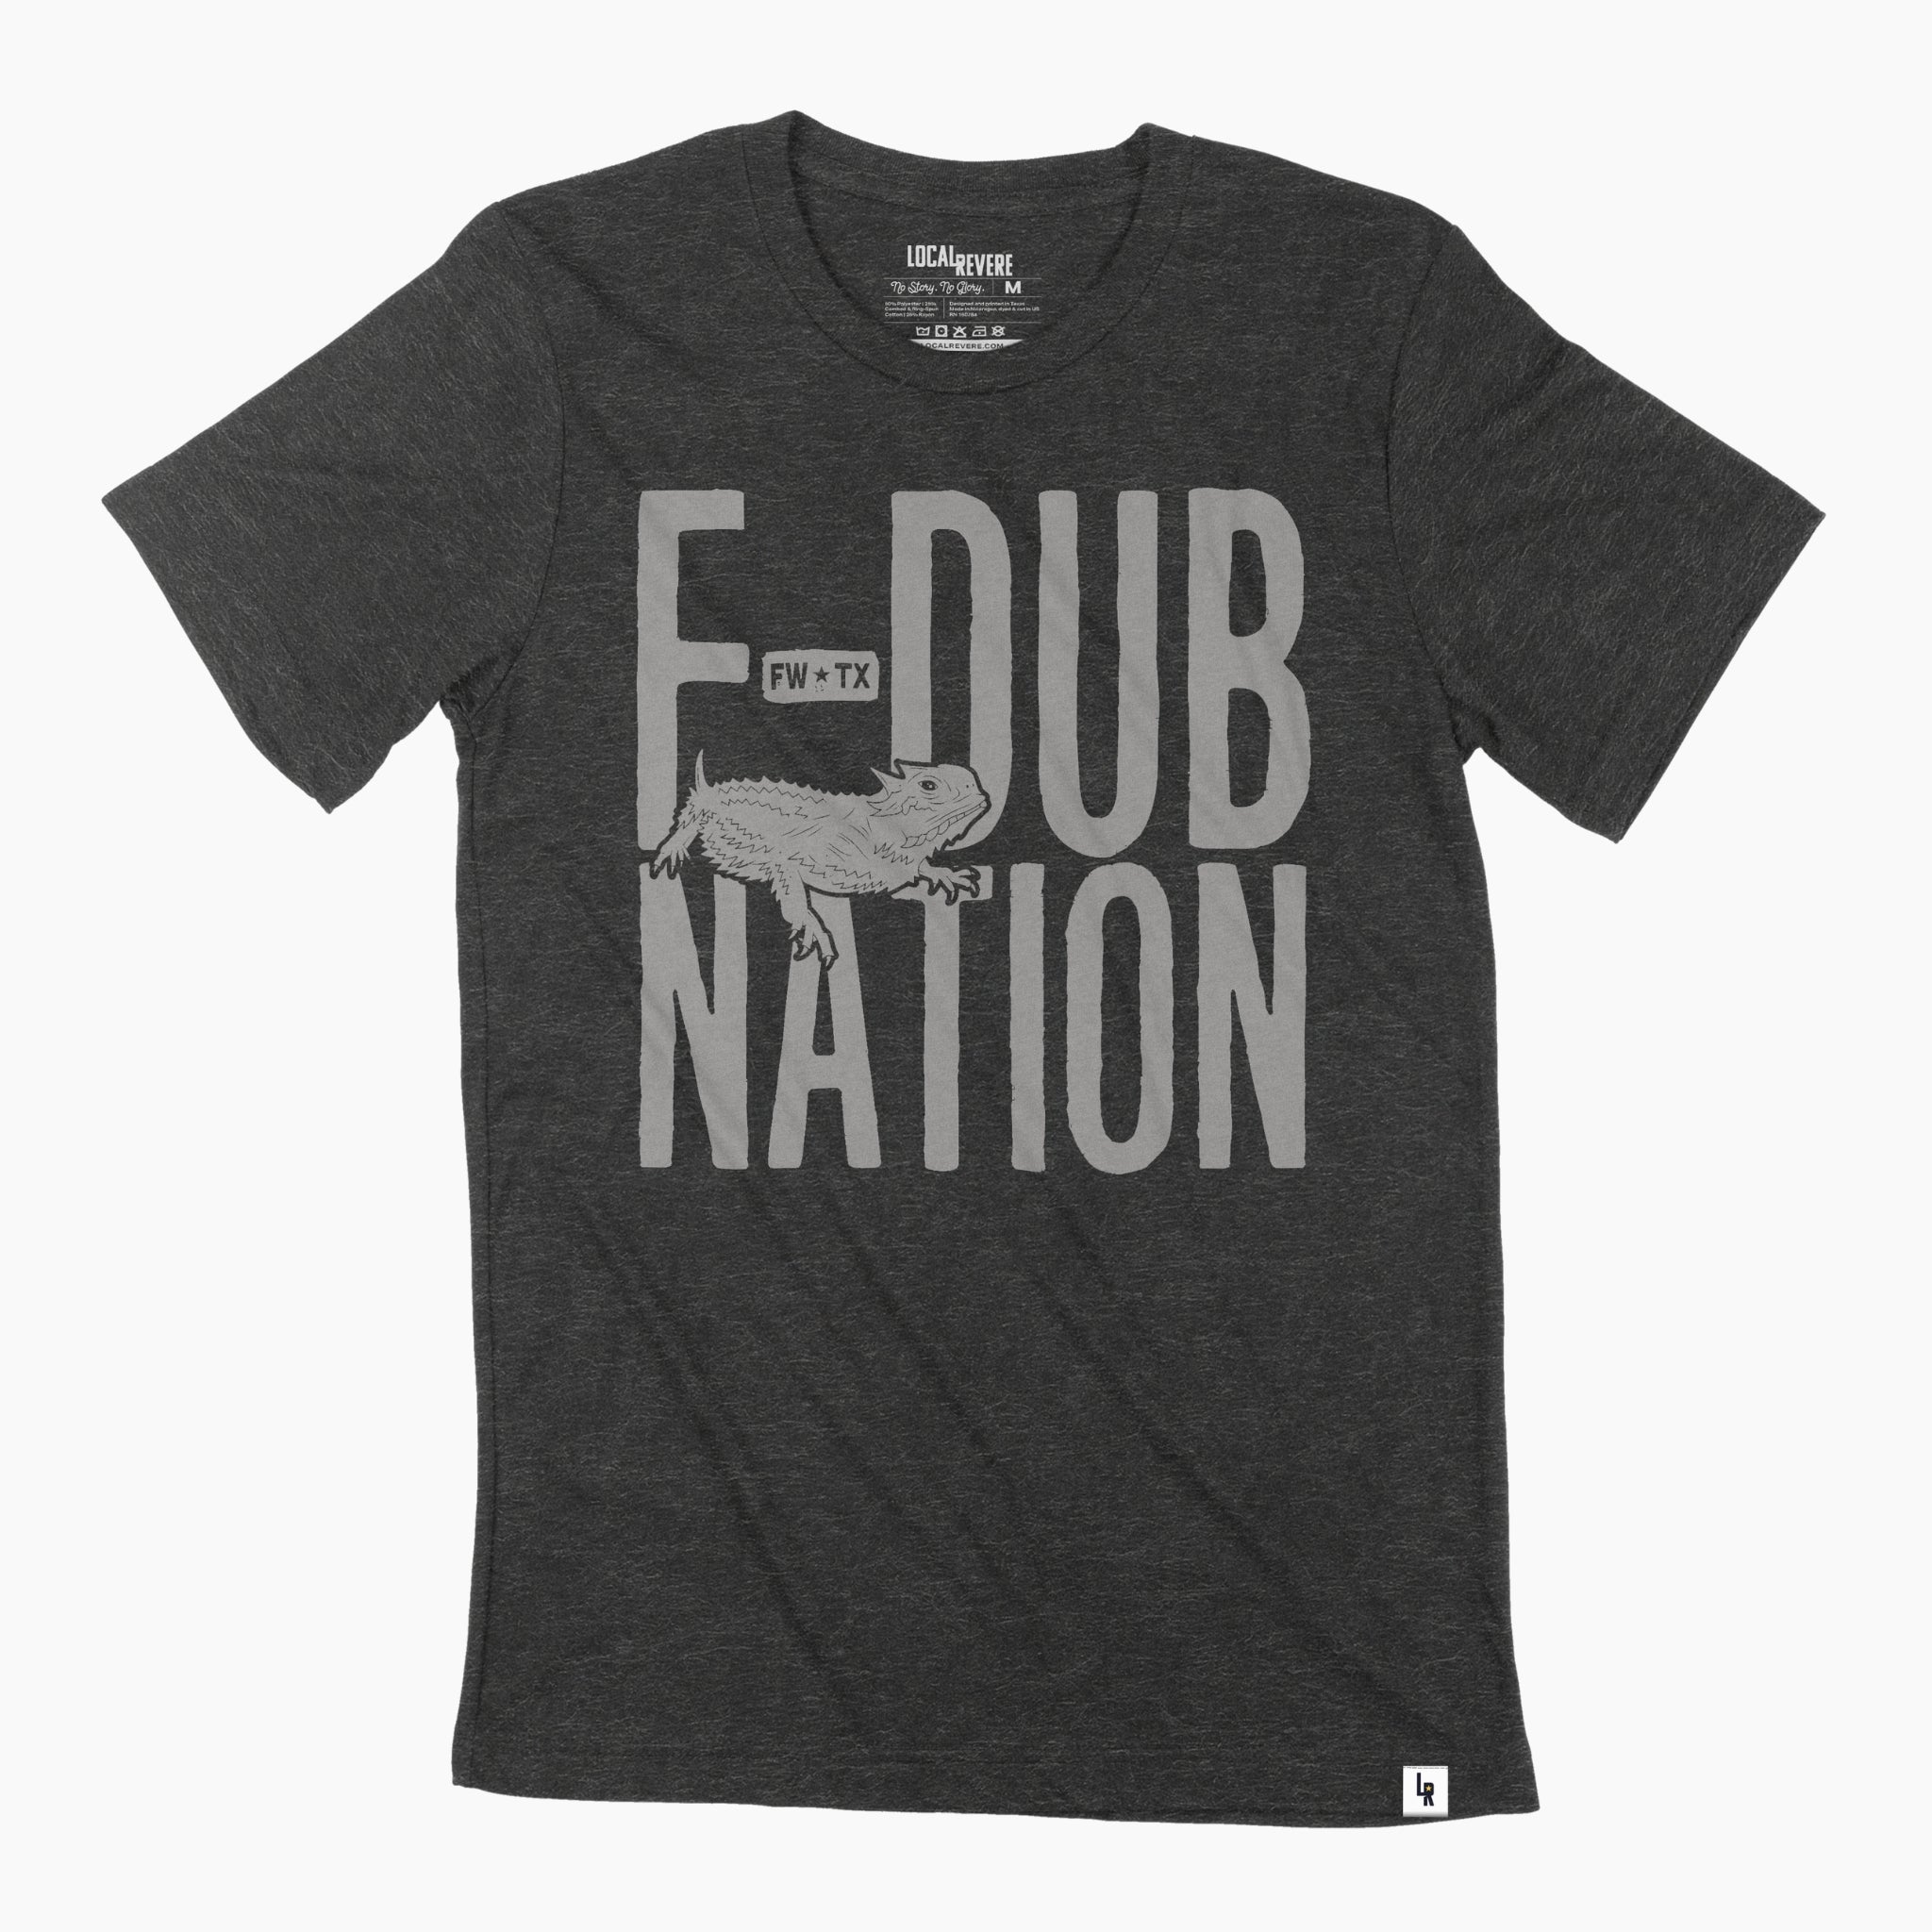 TCU F-Dub Nation Tee